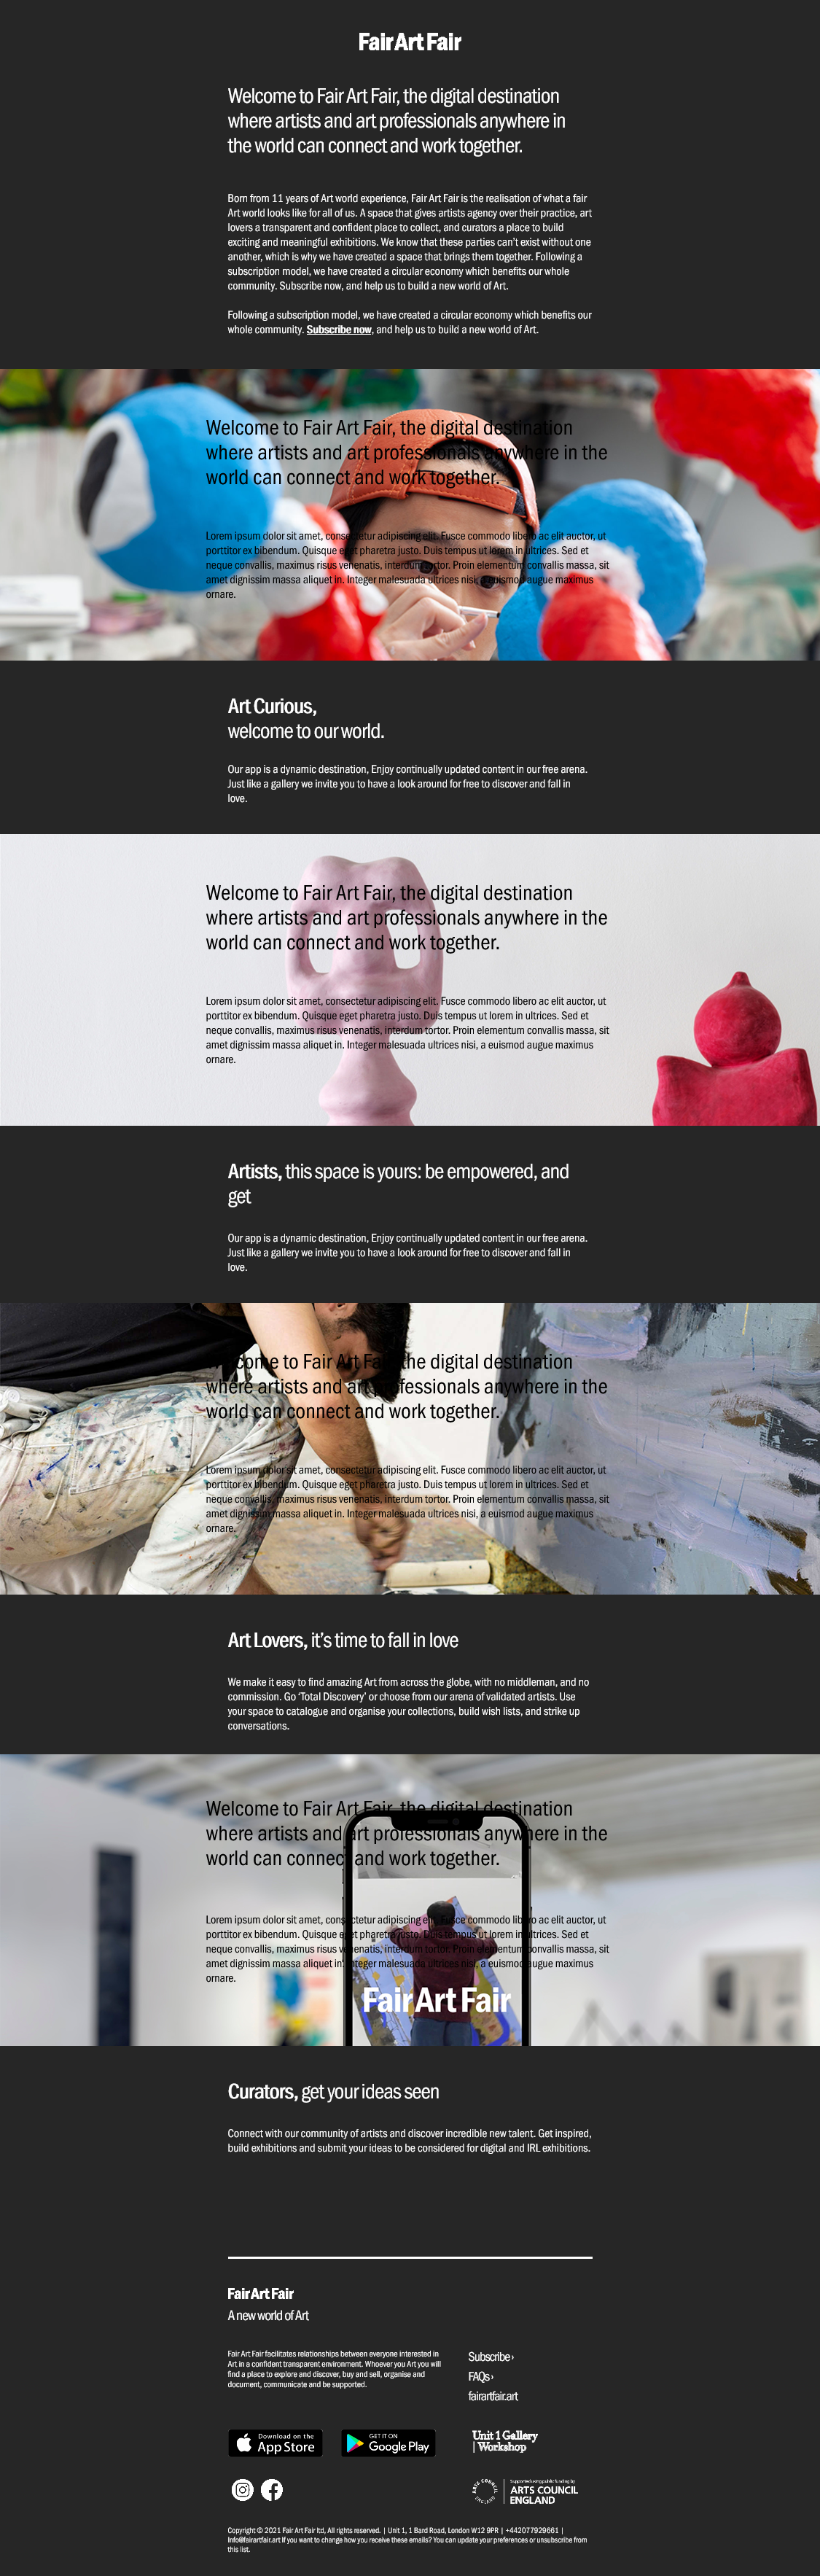 Email Templates Created For Fair Art Fair Marketing Arts Dark mode on desktop design